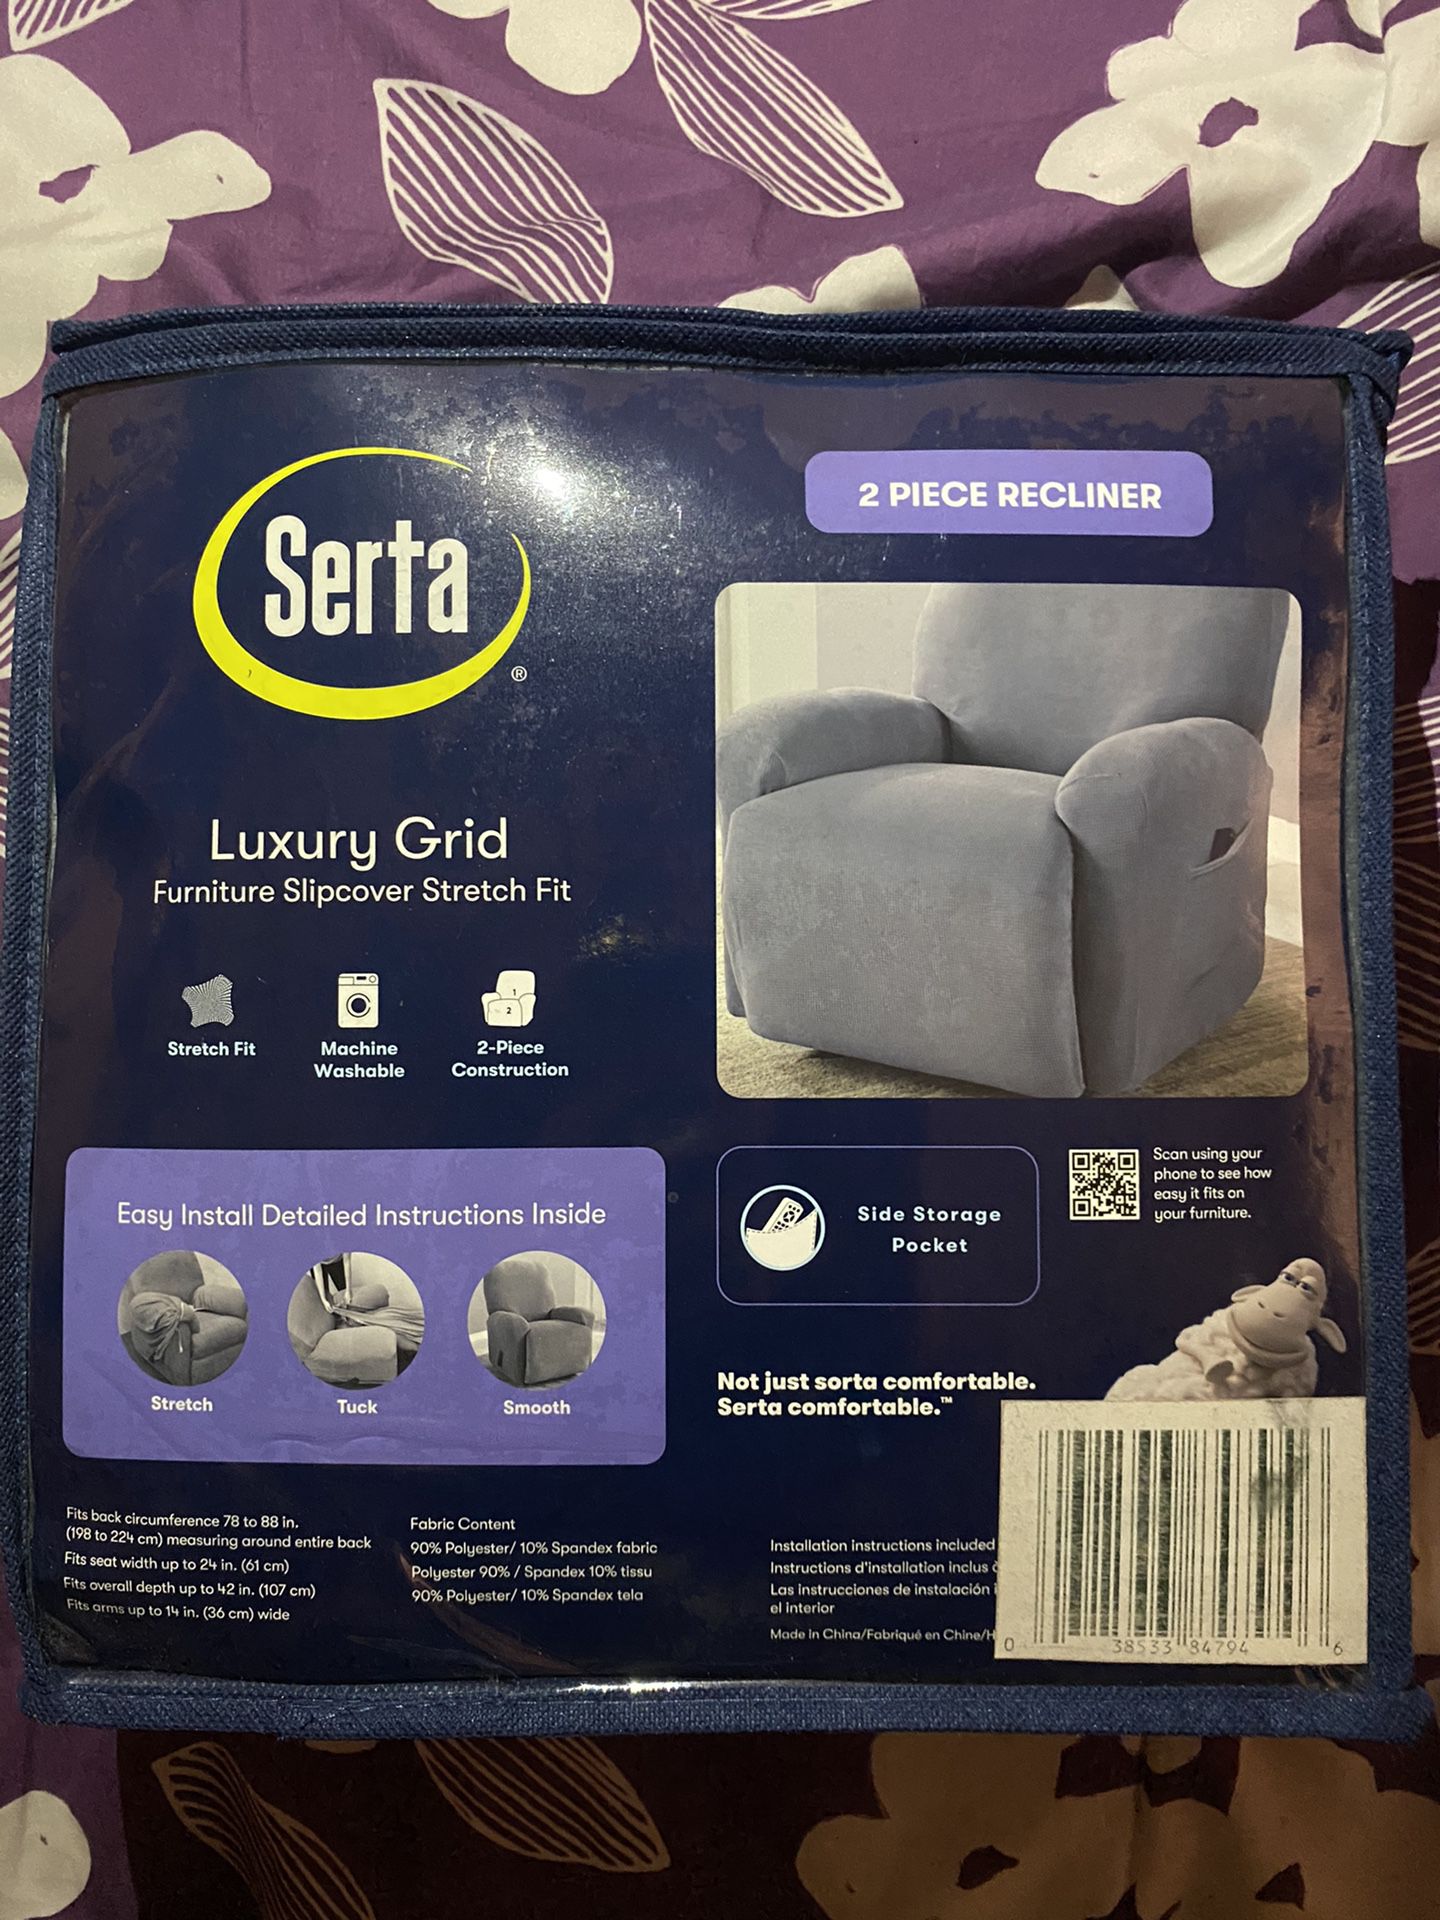 New SERTA luxury grid furniture slipcover stretch fit